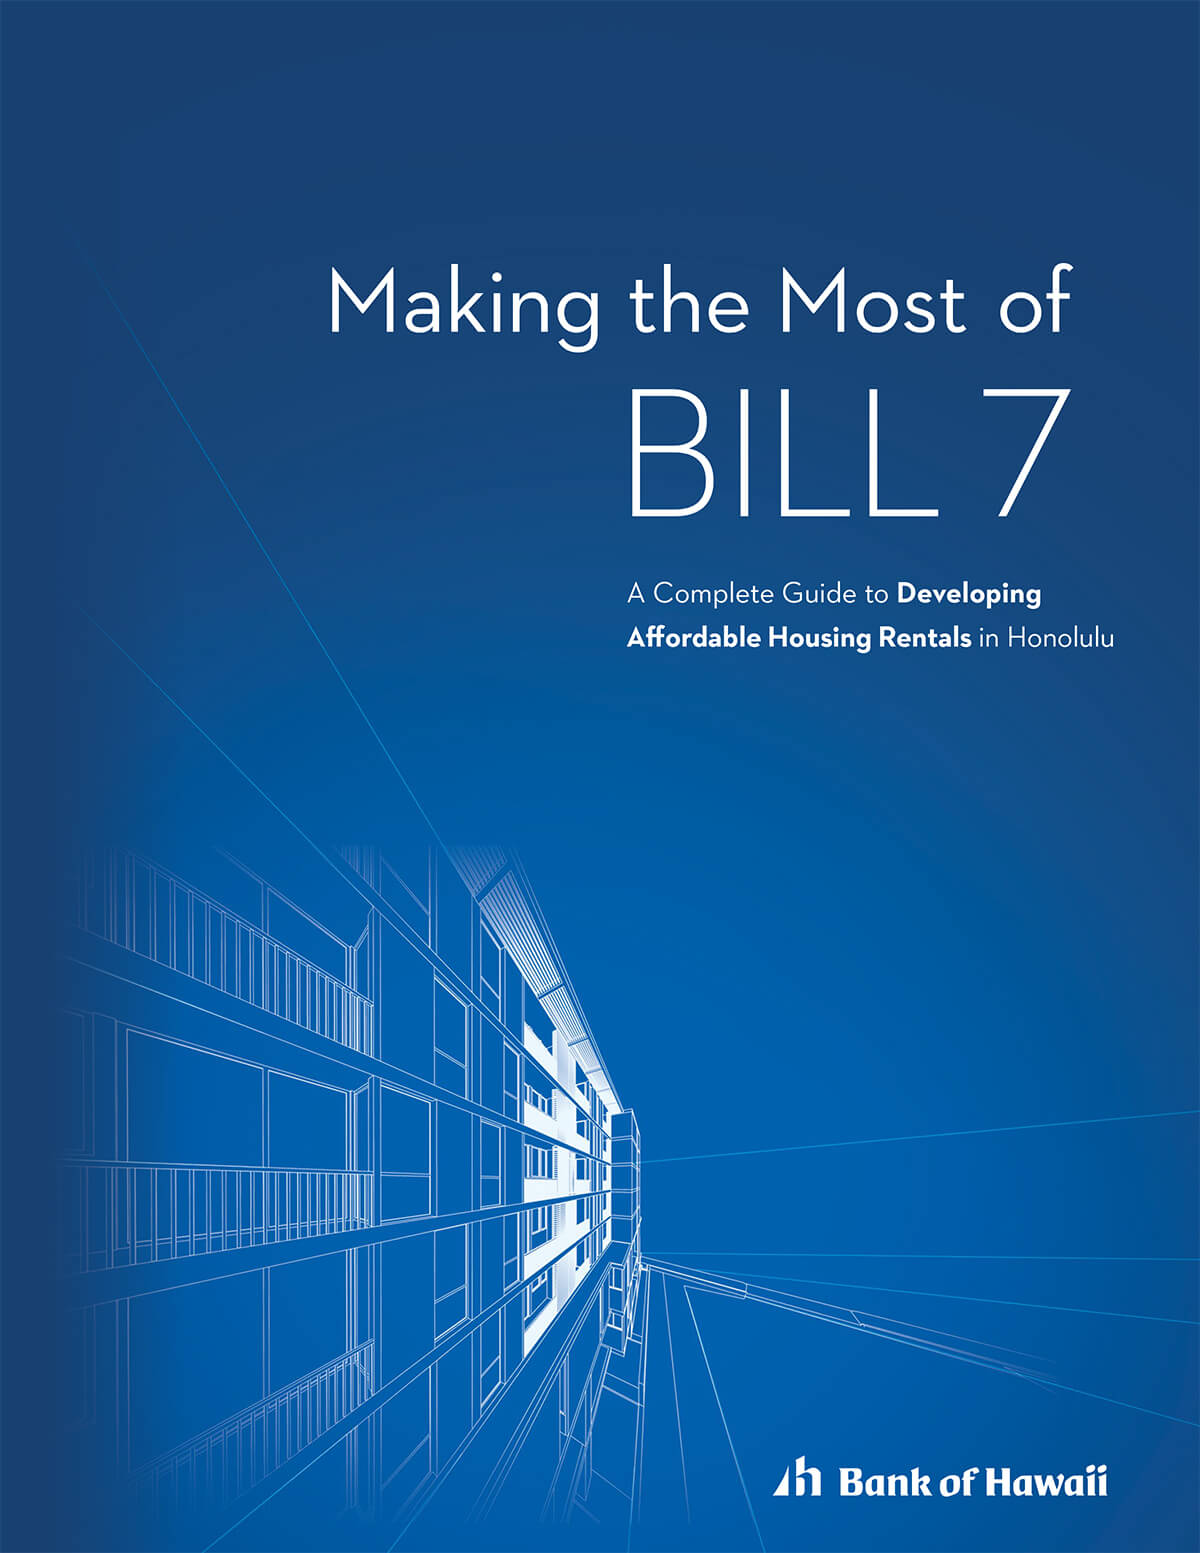 Commercial Real Estate Bill 7 eBook